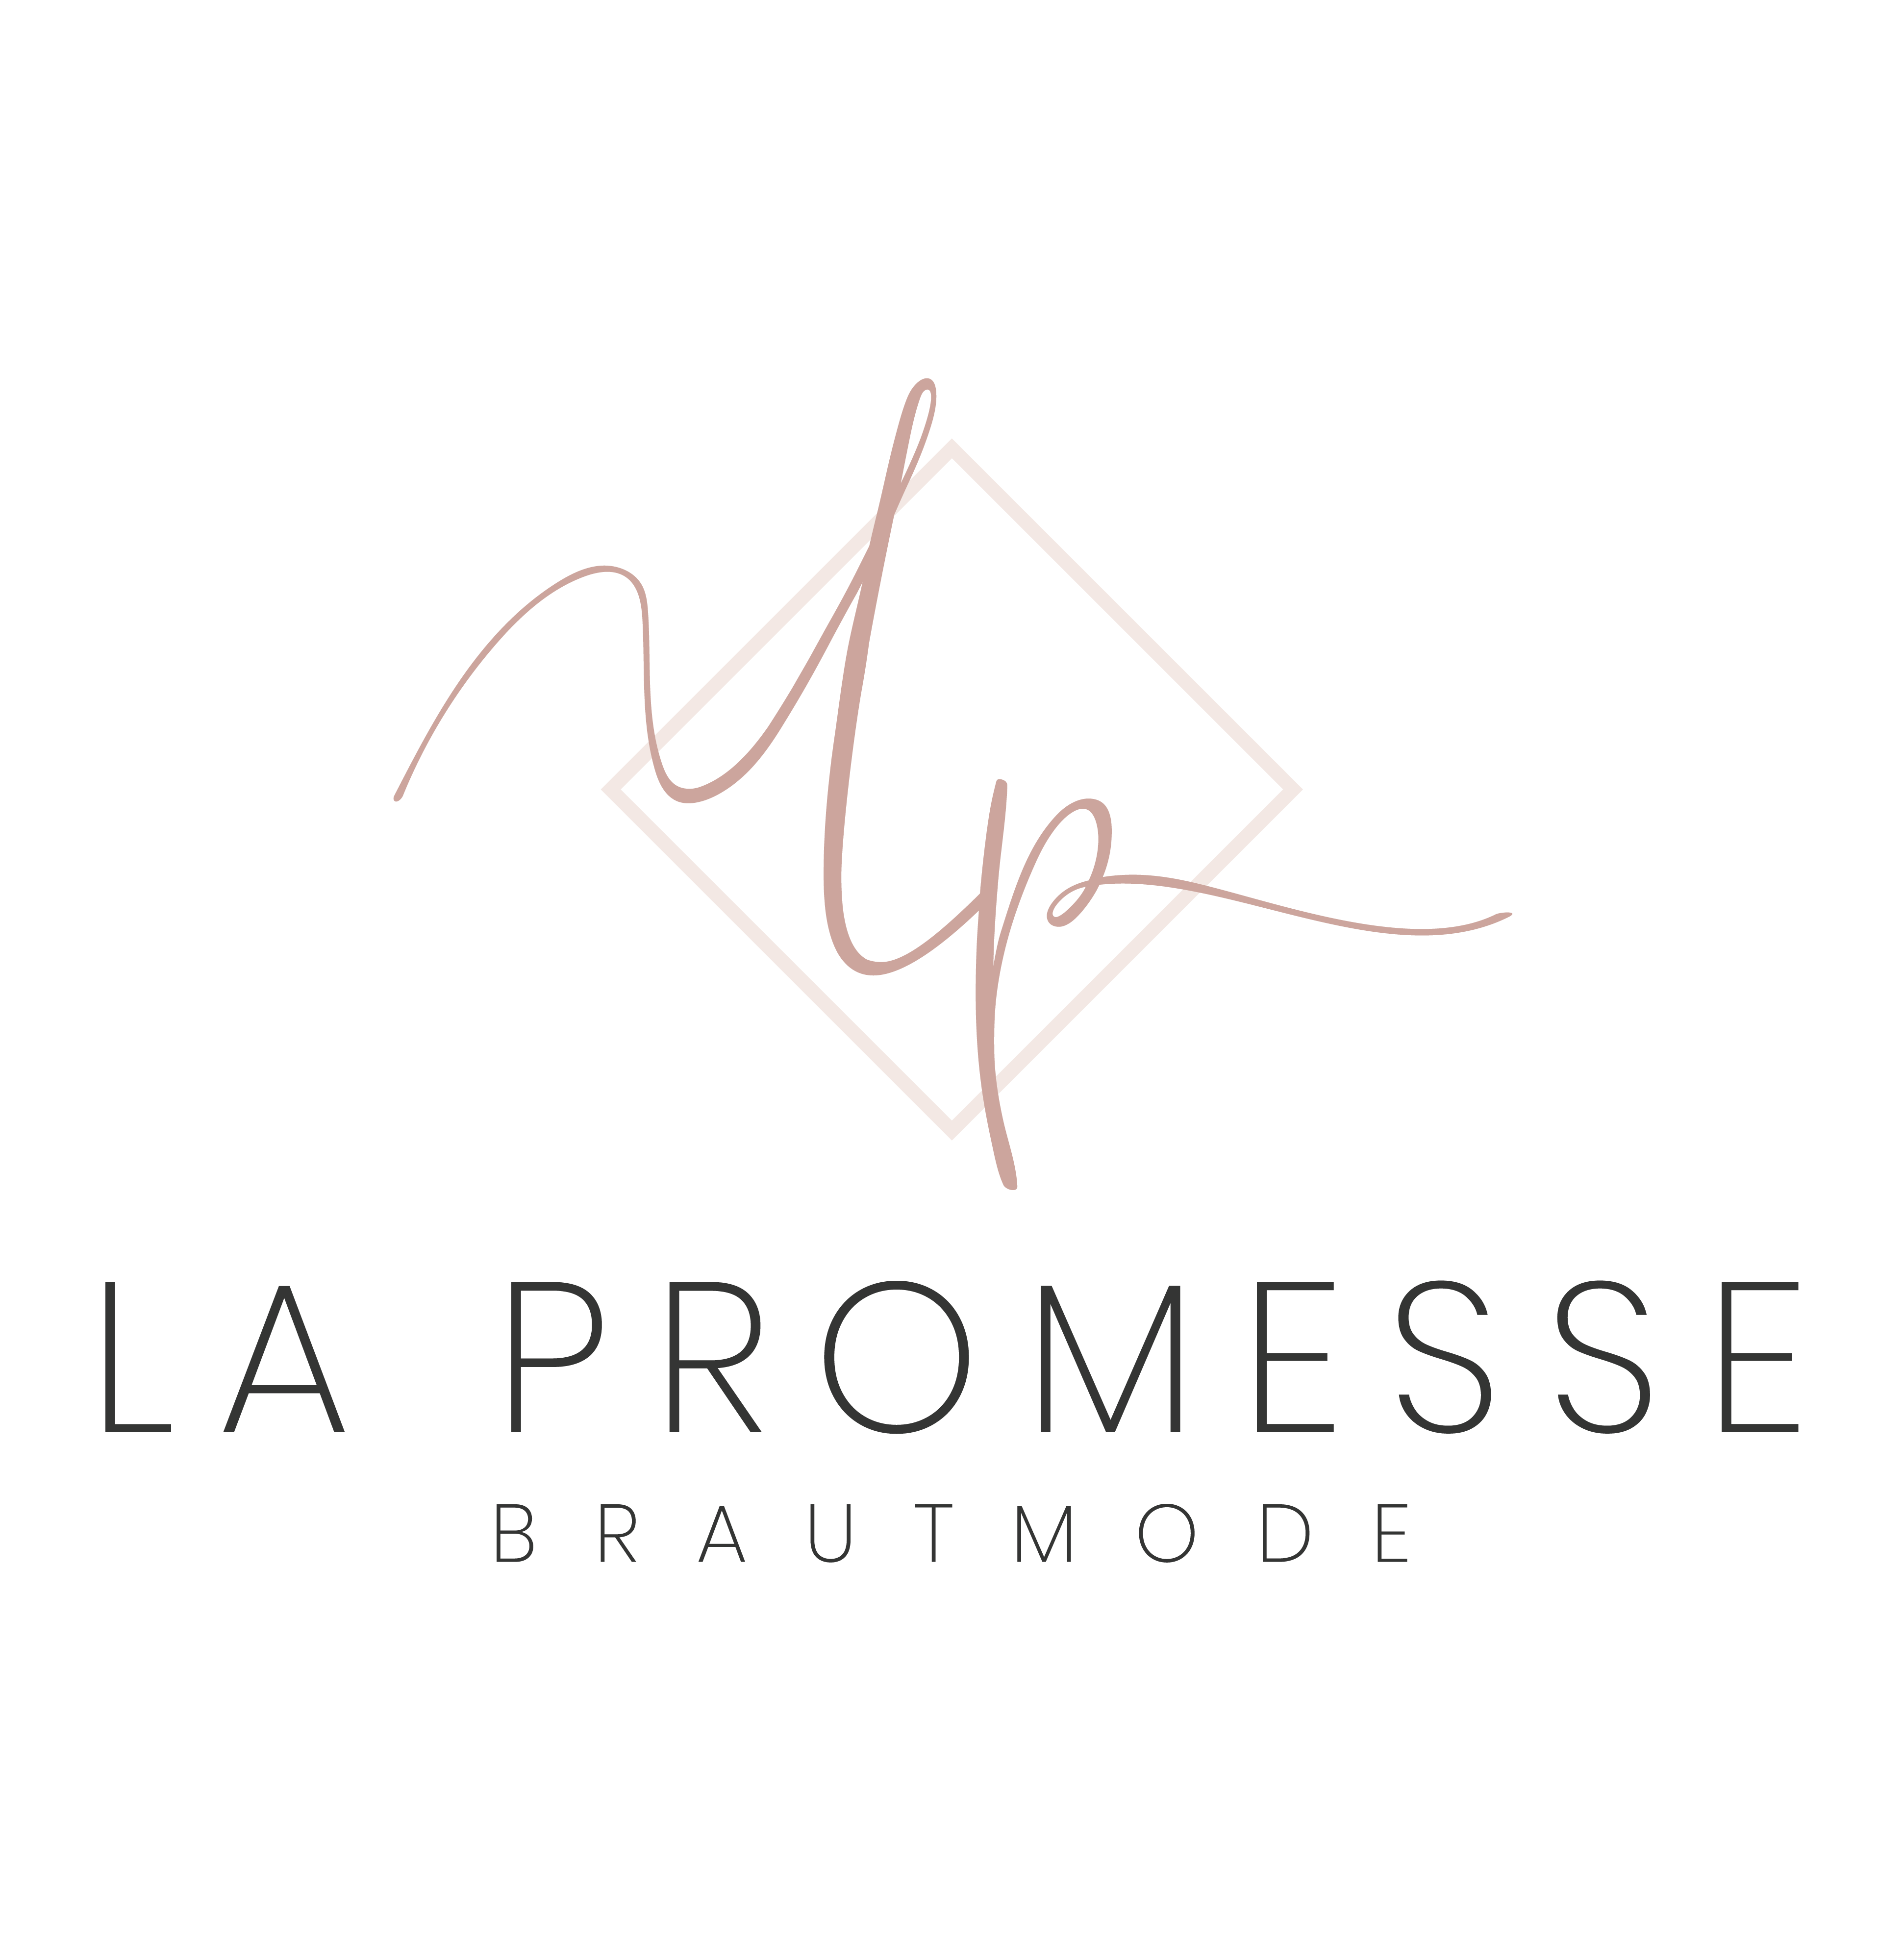 La Promesse Brautmode in Augsburg